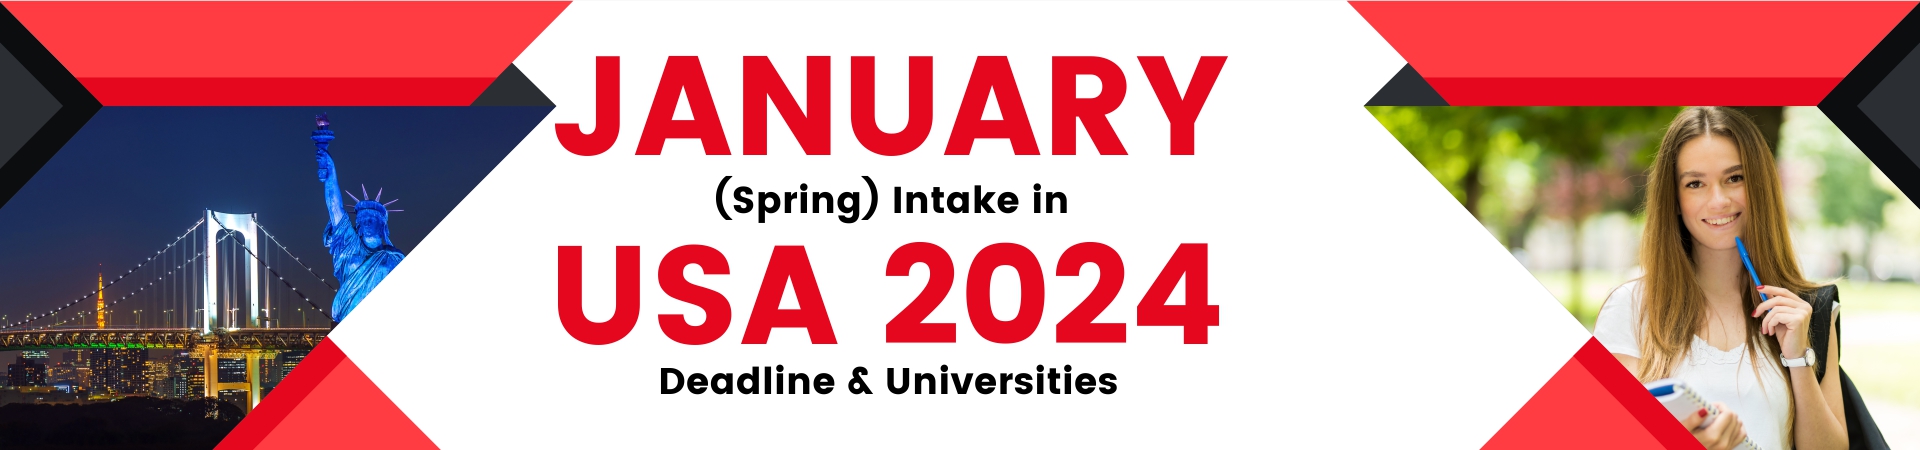 January (Spring) Intake in USA 2024: Deadline & Universities